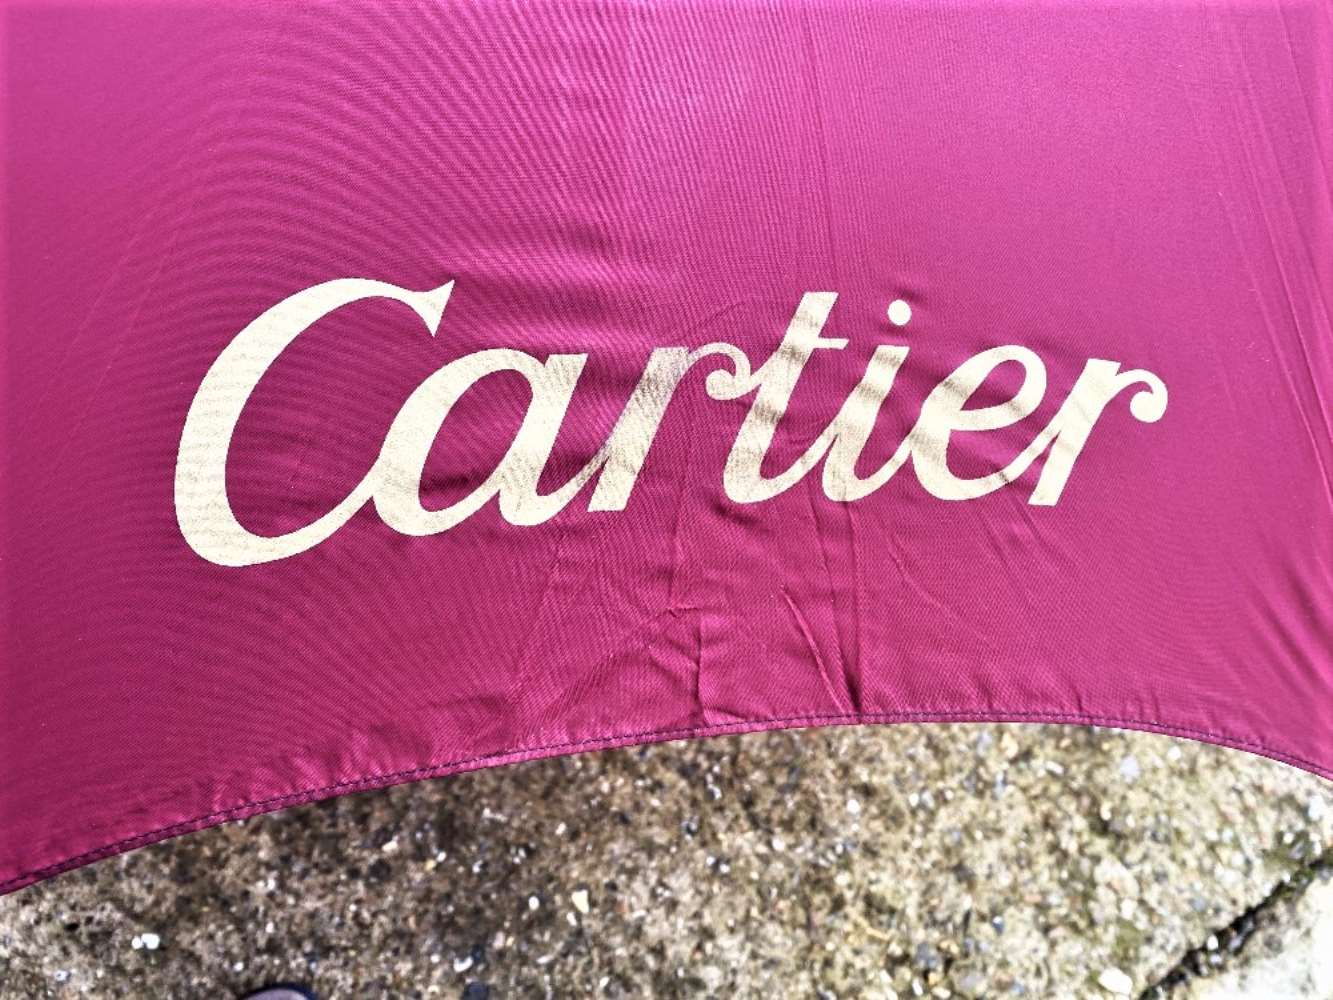 Cartier Paris - Umbrella Veritable Cherbourg Burgundy 100 - Image 4 of 6